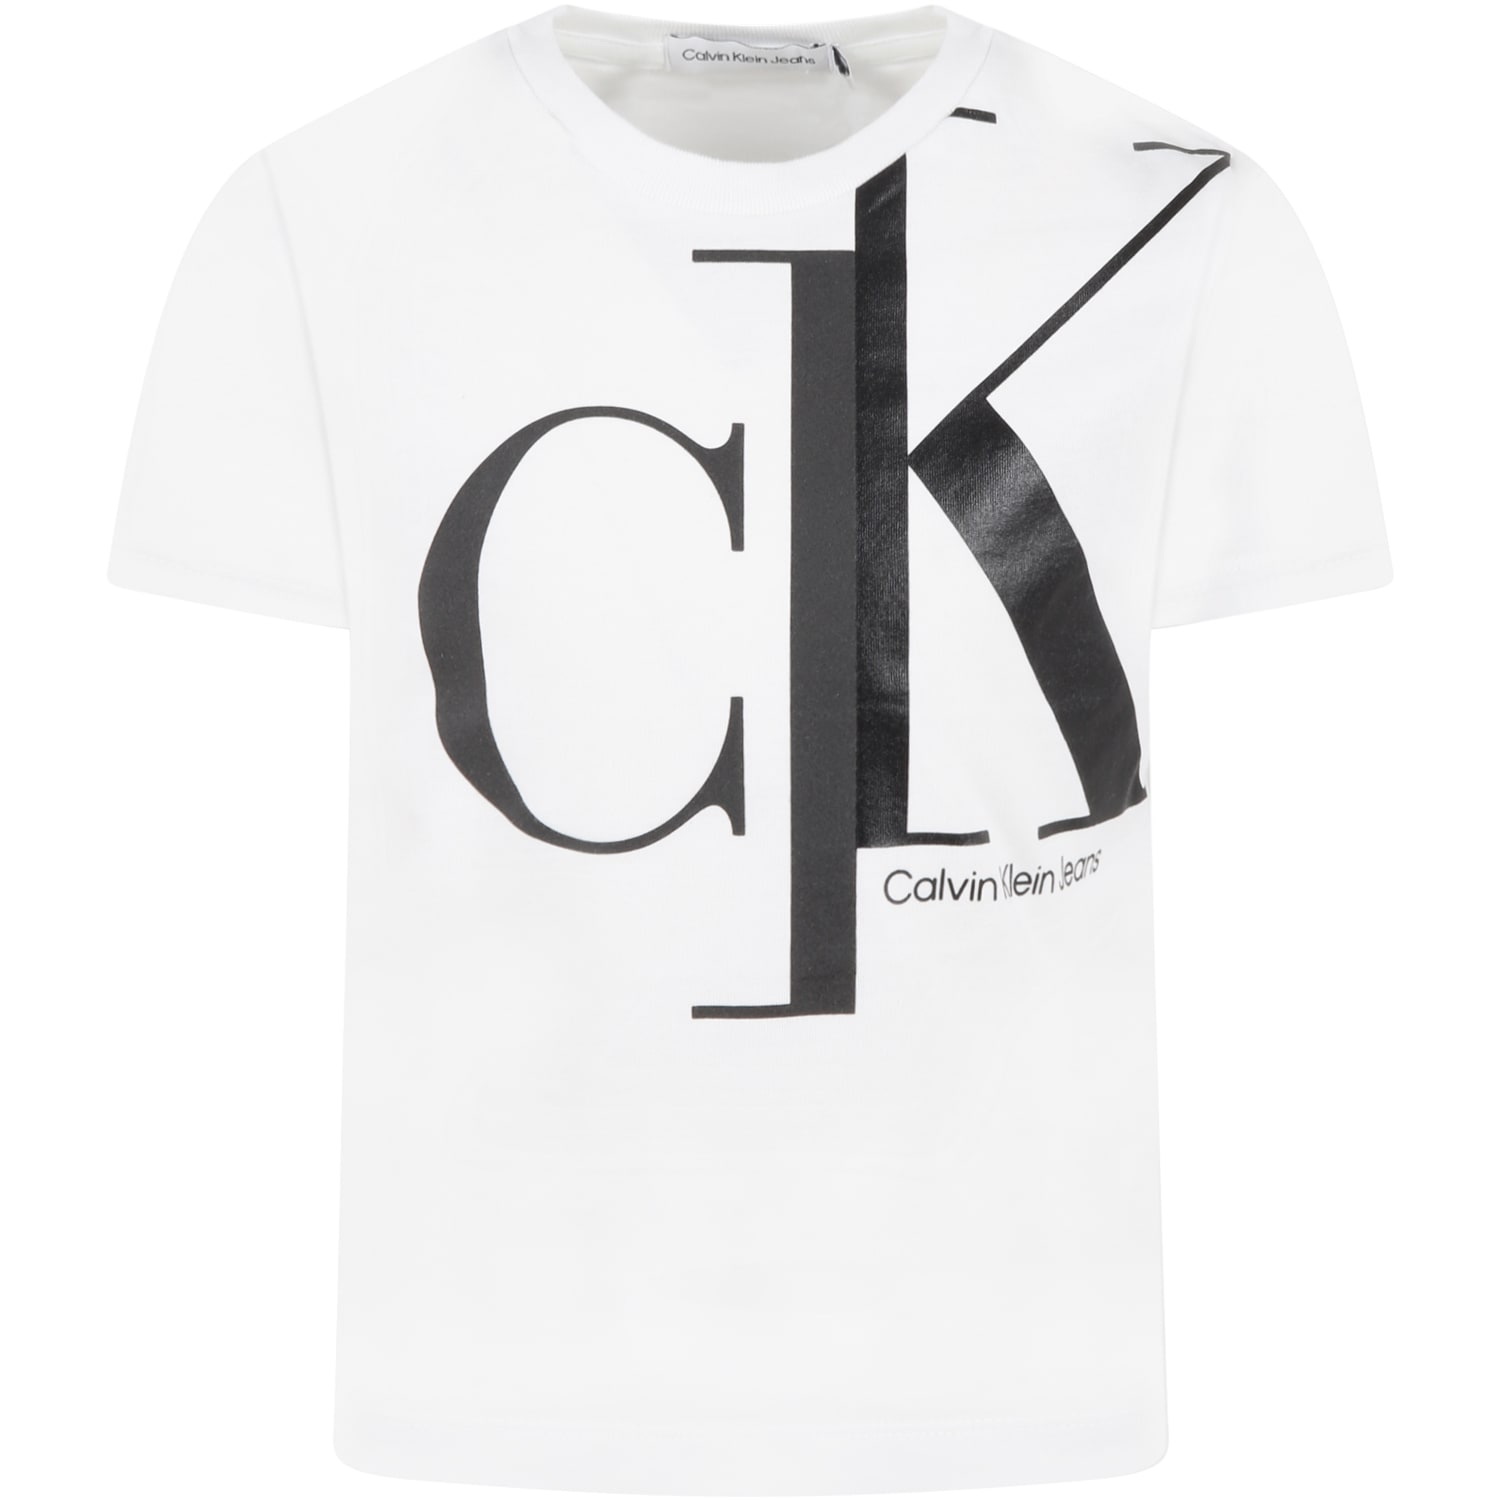 Calvin Klein White T-shirt For Kids With Black Logo